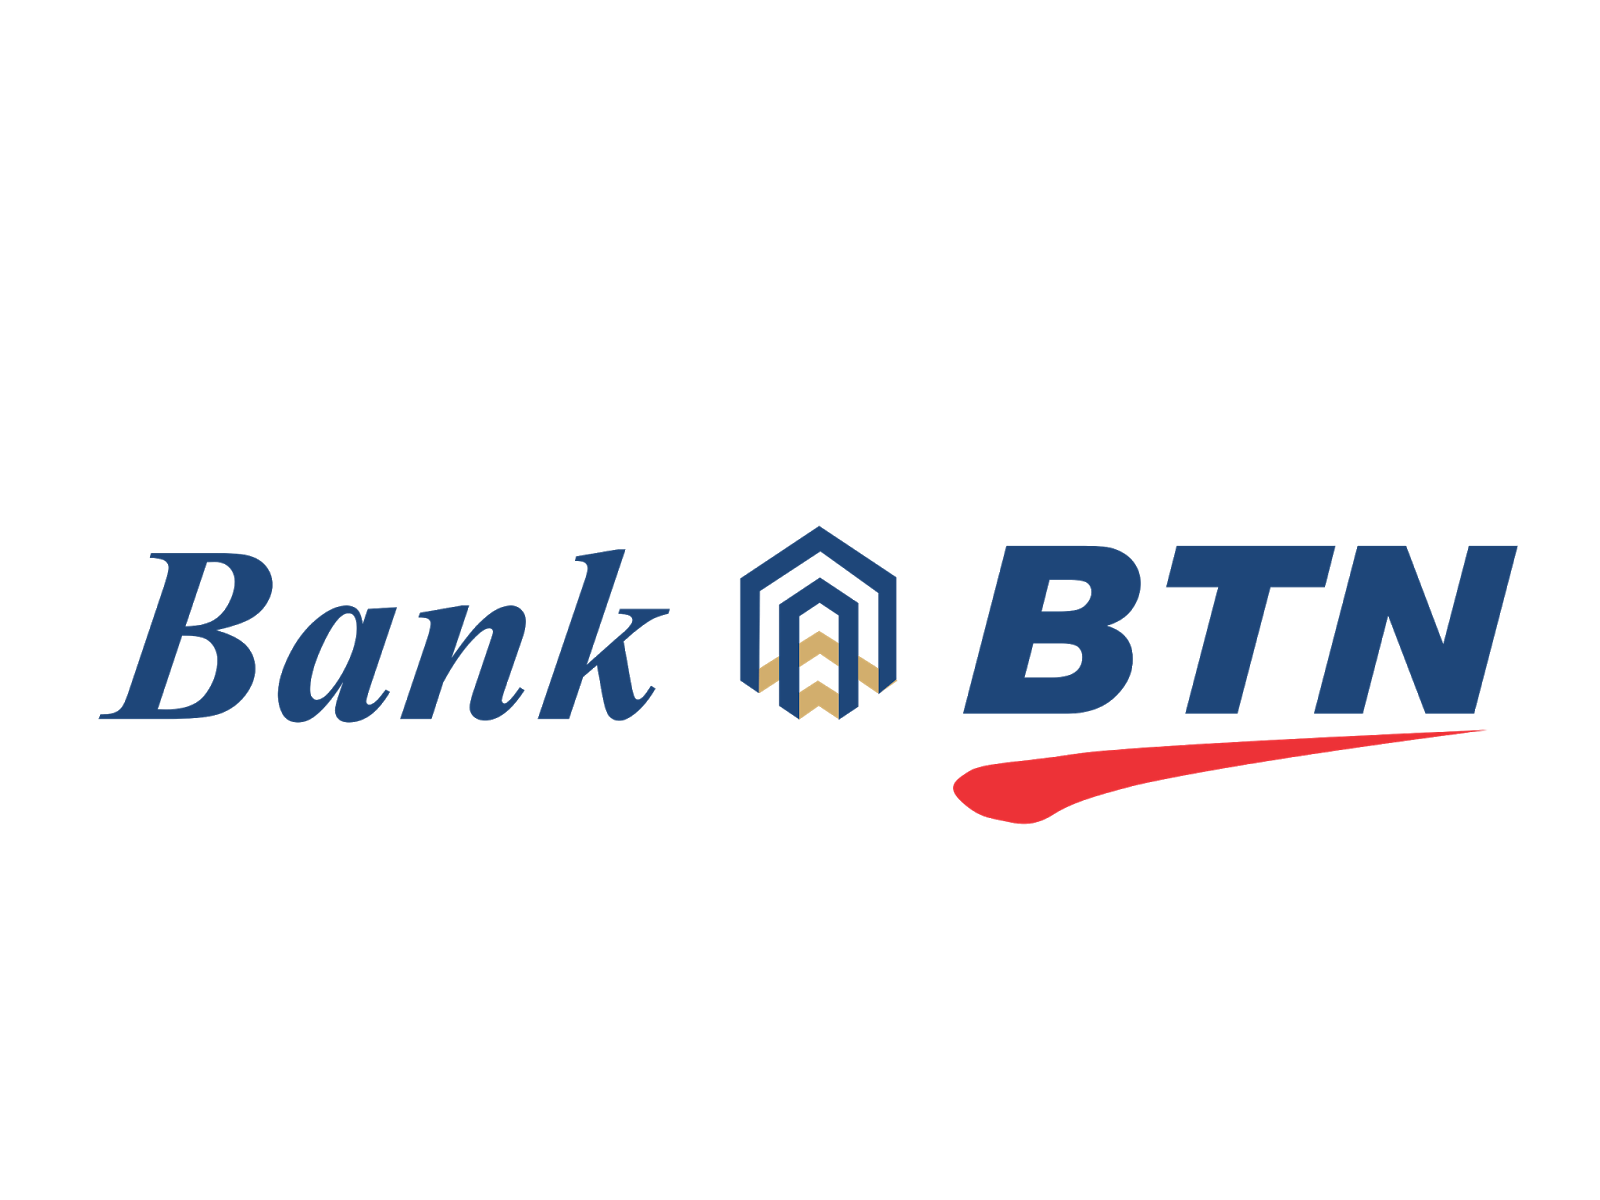 Logo Bank BTN Format Cdr & Png | GUDRIL LOGO | Tempat-nya Download logo CDR